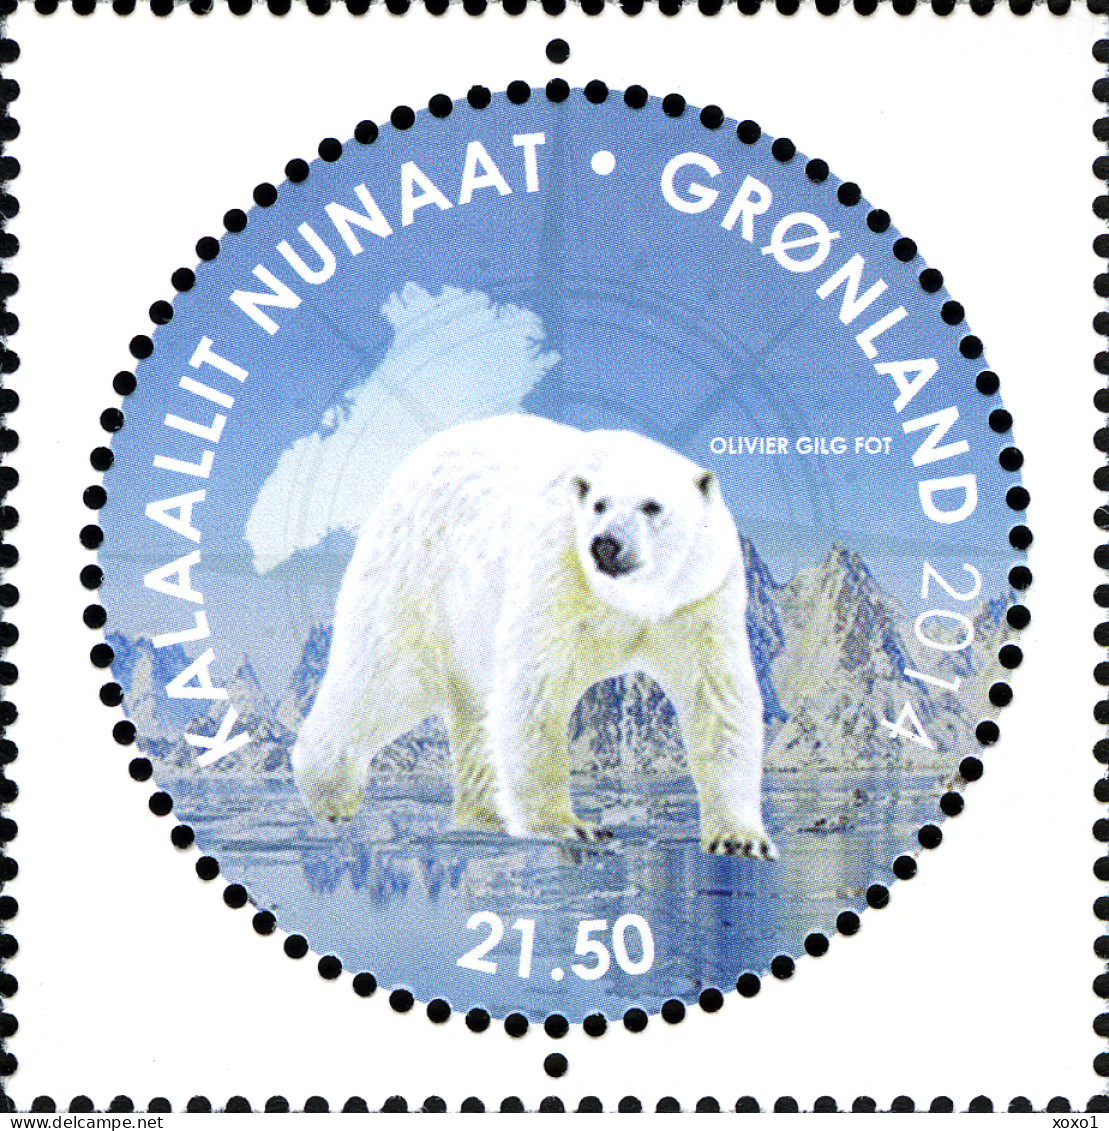 Greenland 2014 MiNr. 680 (Block 70) Dänemark Grönland Ross Antarctica Pole Bears BIRDS Penguins 1v + S\sh MNH** 13.00 € - Arctische Fauna